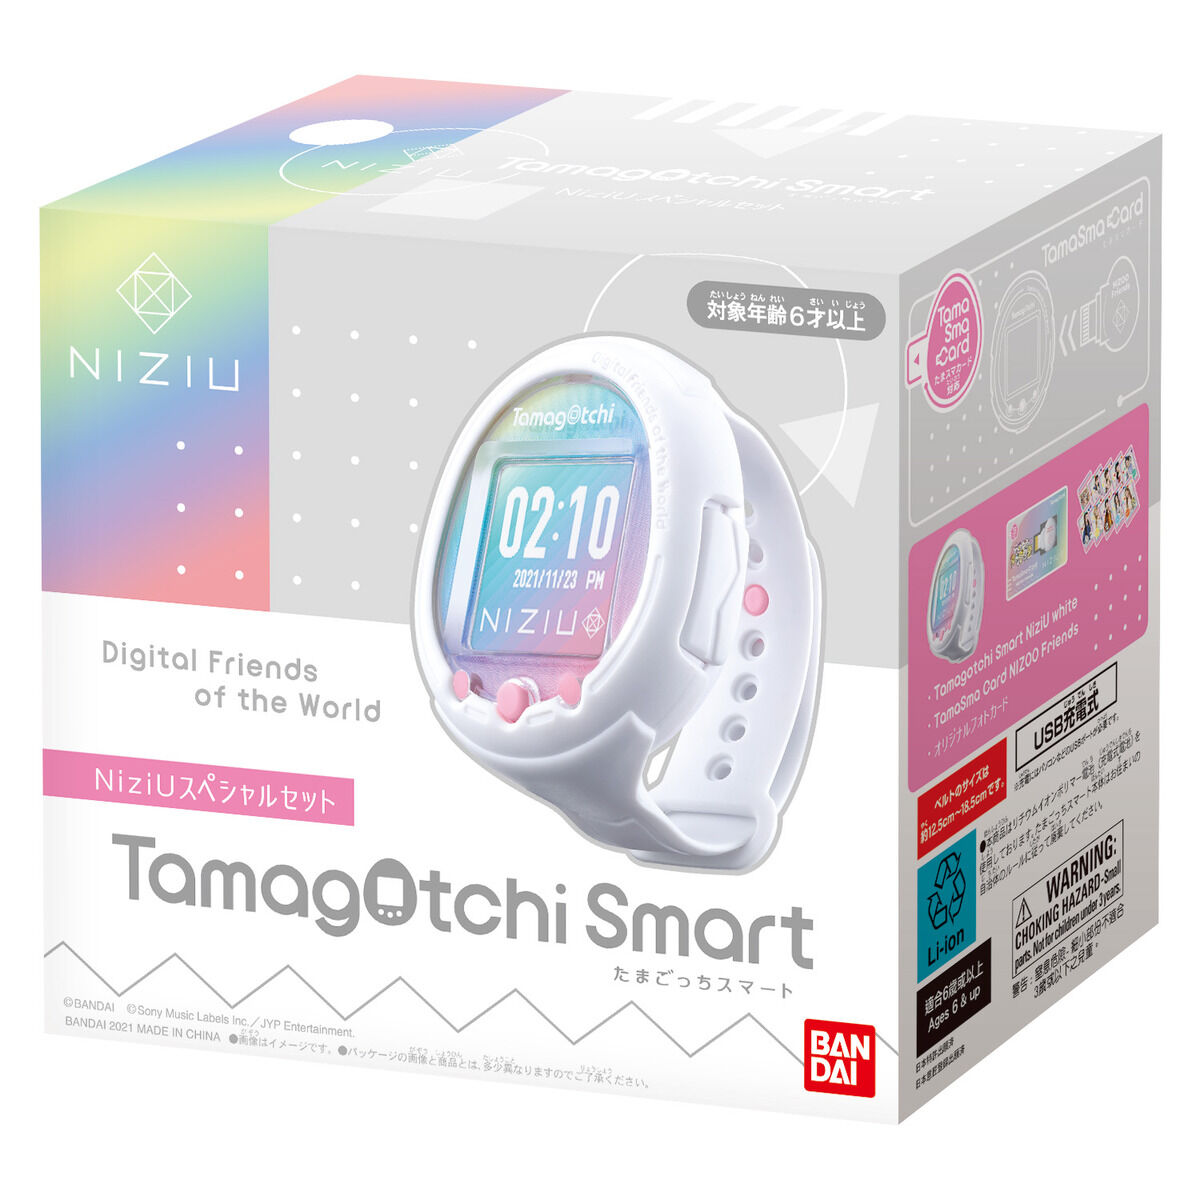 Tamagotchi Smart NiziUスペシャルセット | たまごっちシリーズ